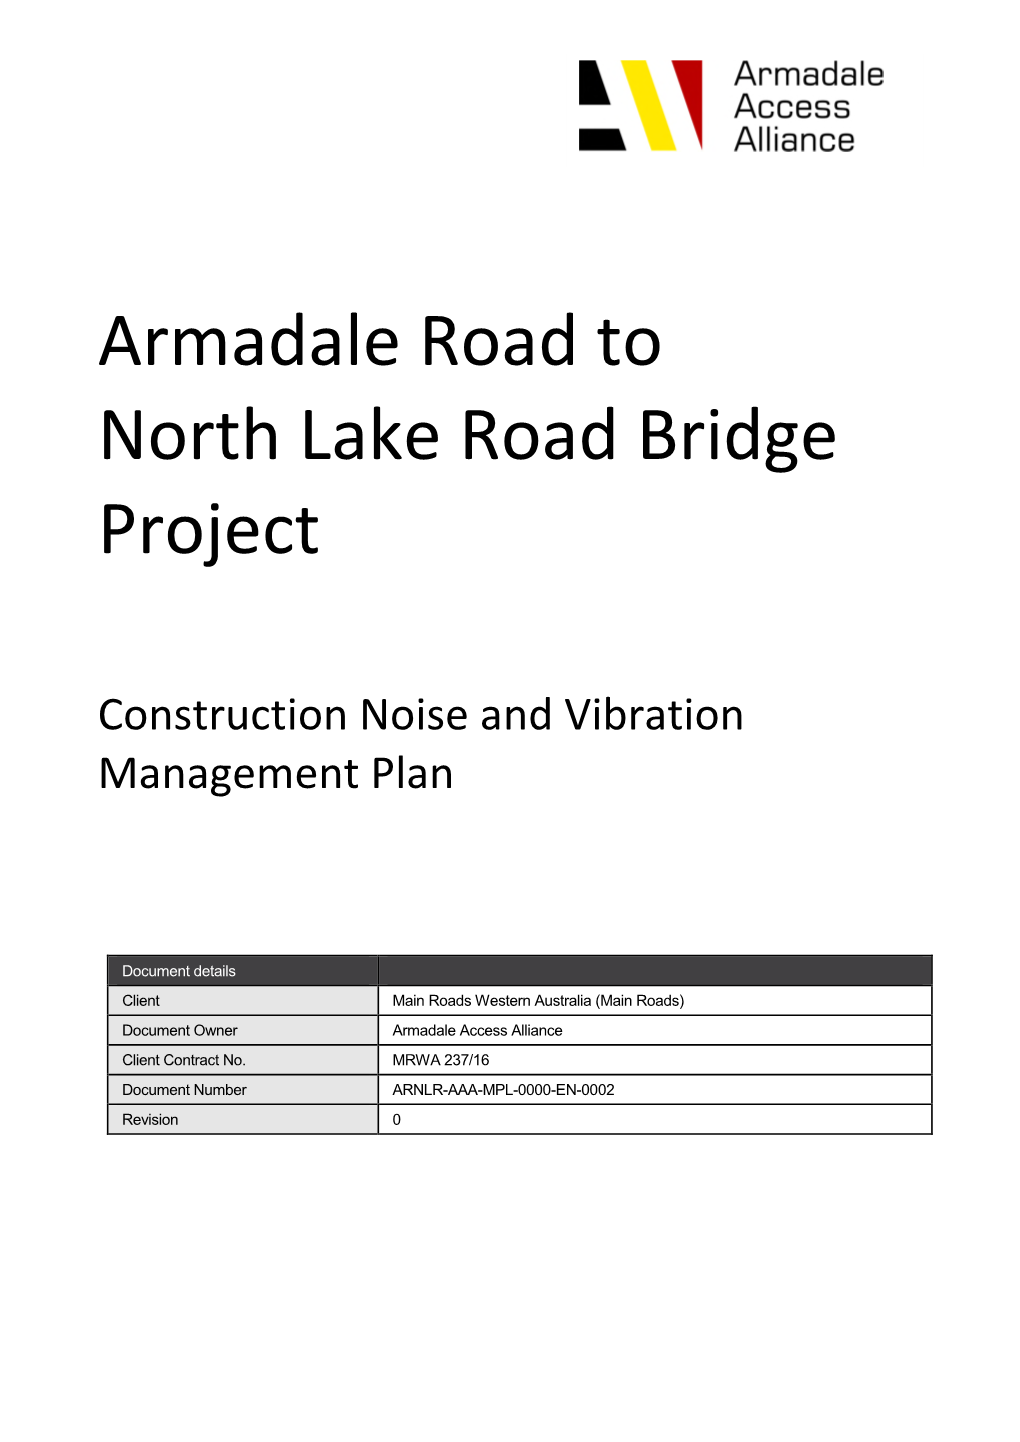 Armadale Road to North Lake Road Bridge Project